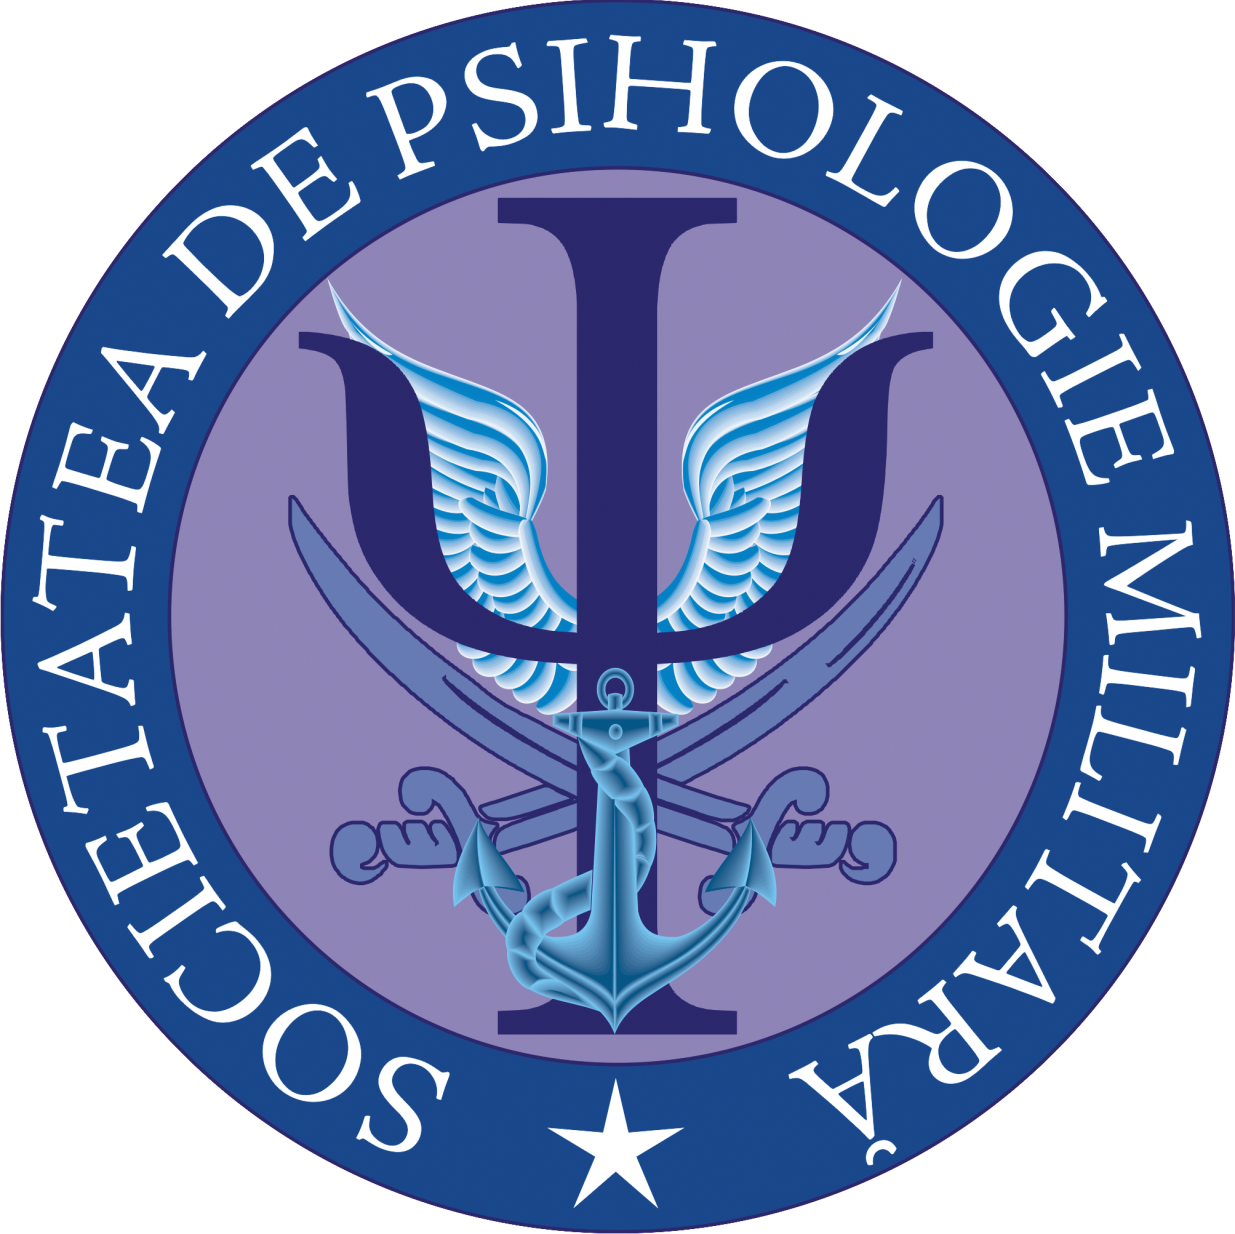 Societatea de psihologie militara